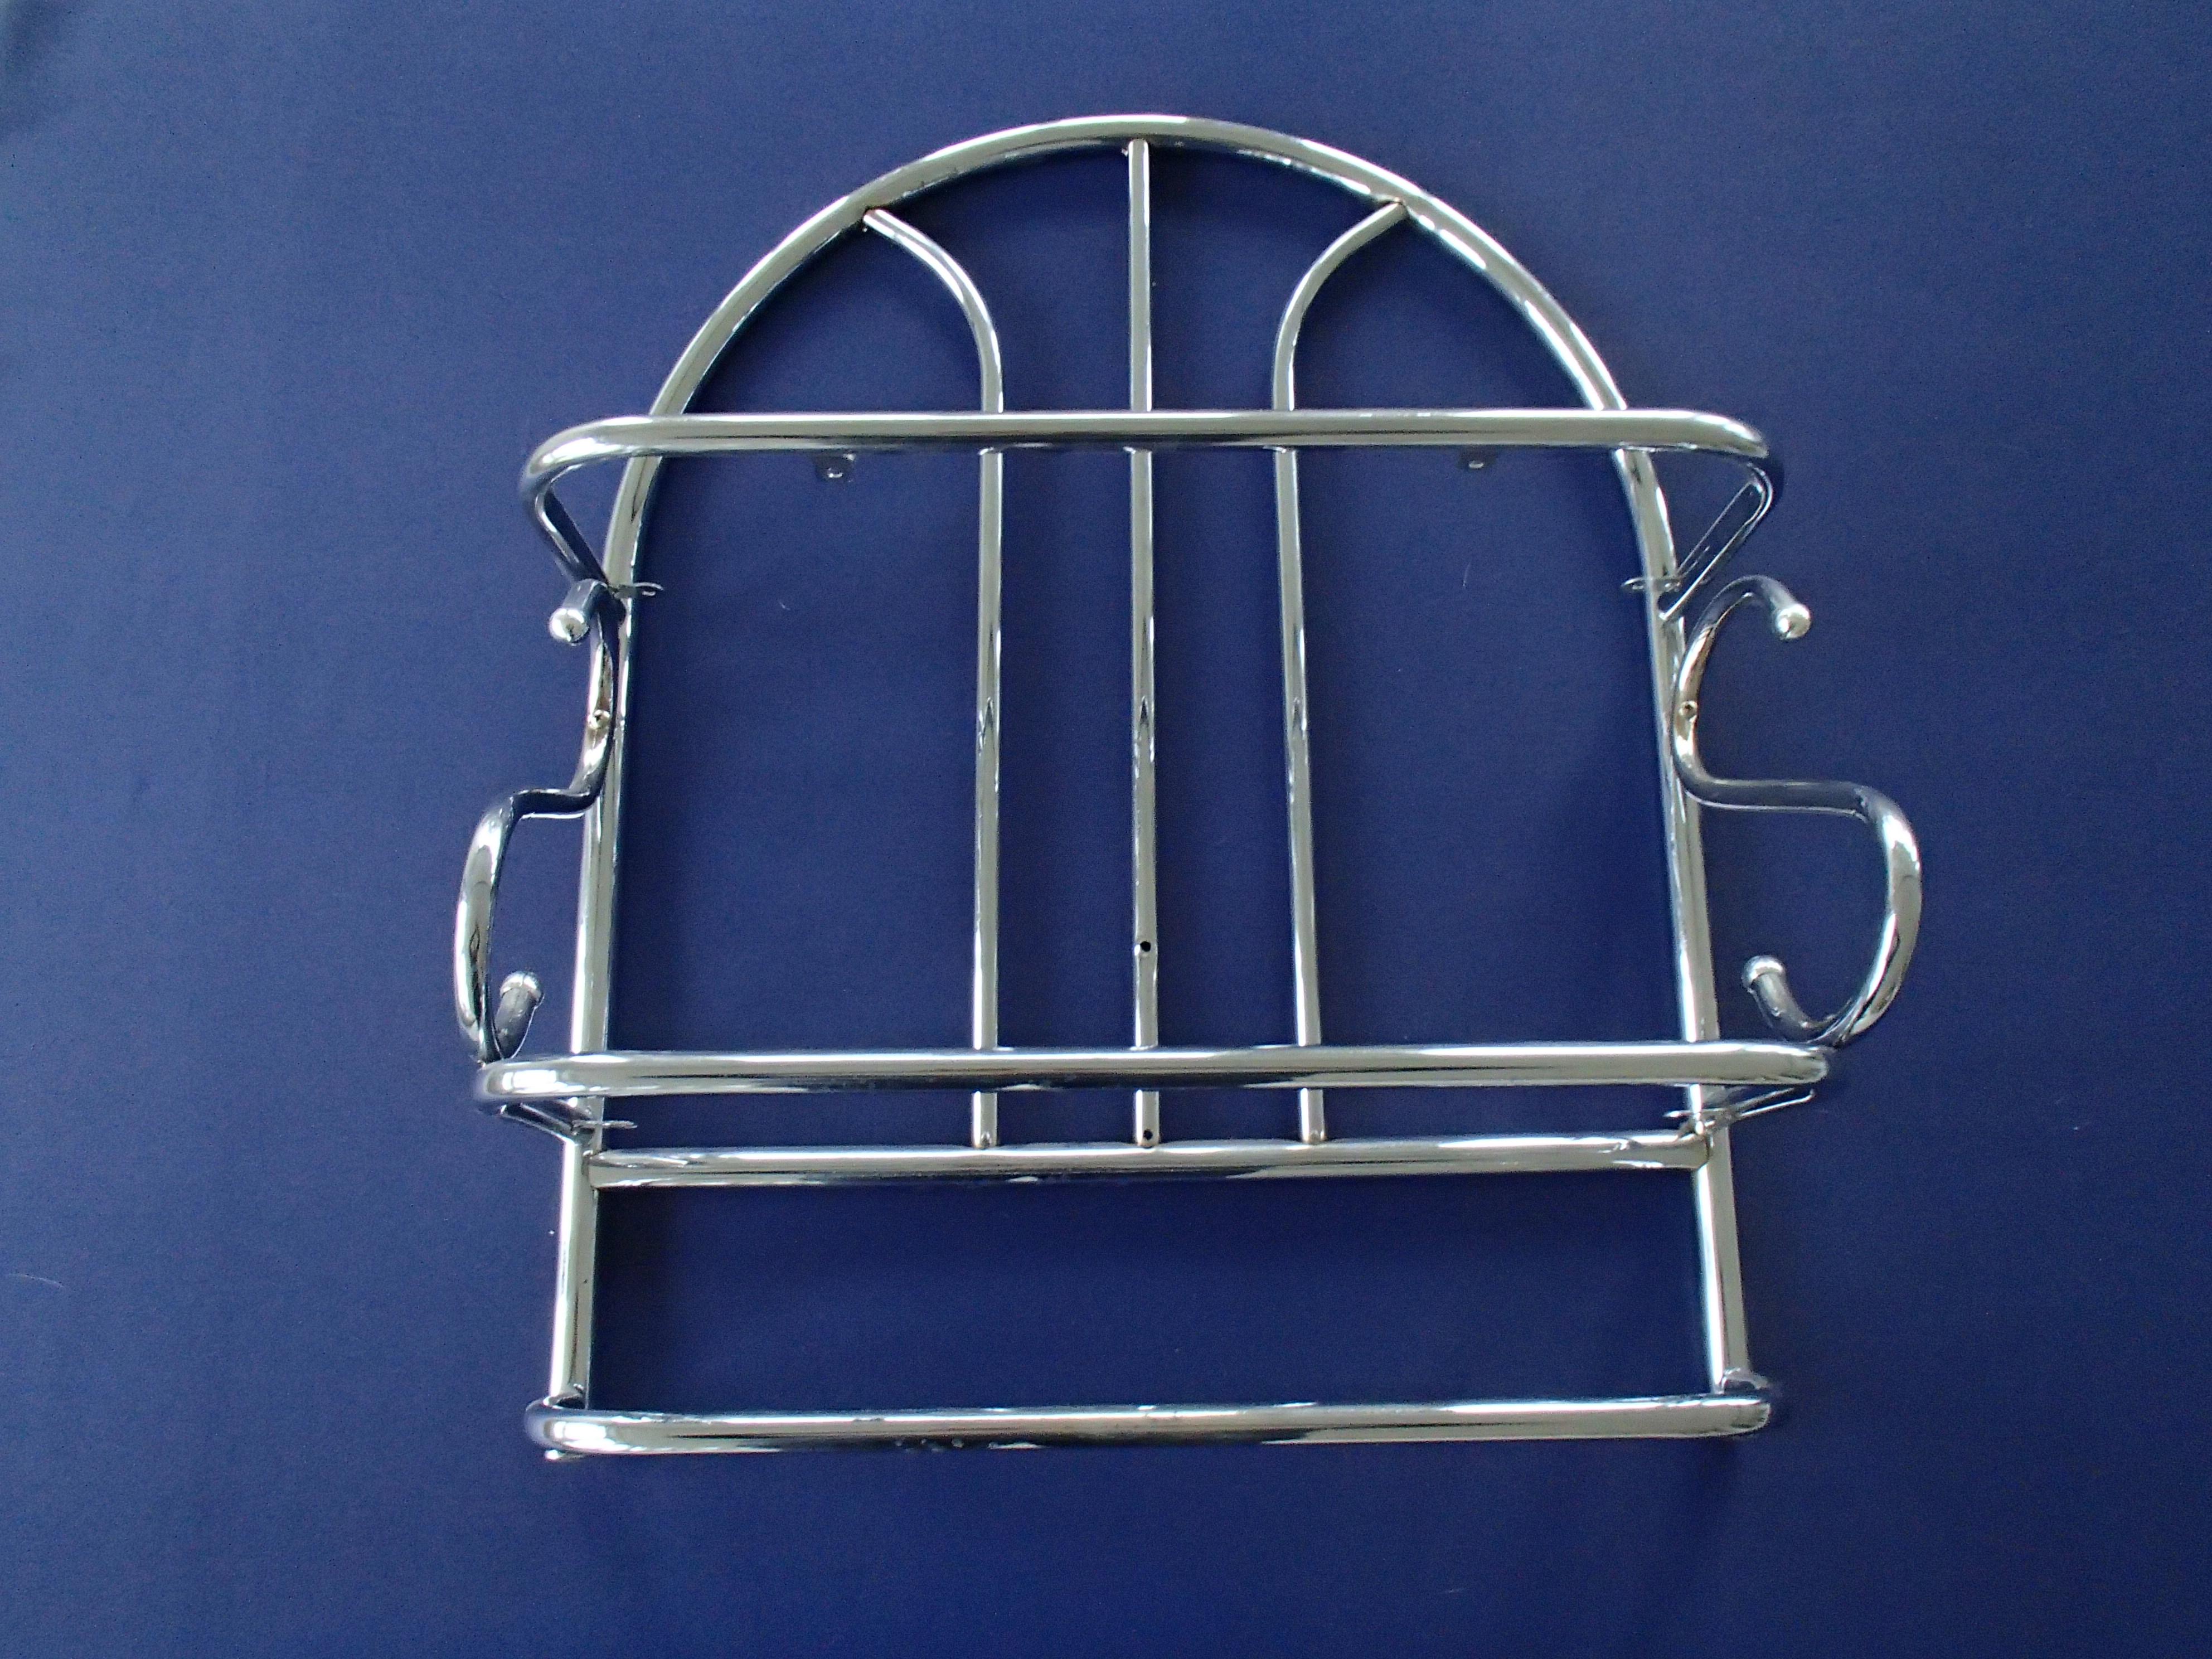 Bauhaus shelv chrome for kitchen or bathroom with towelrack glass shelves missing.